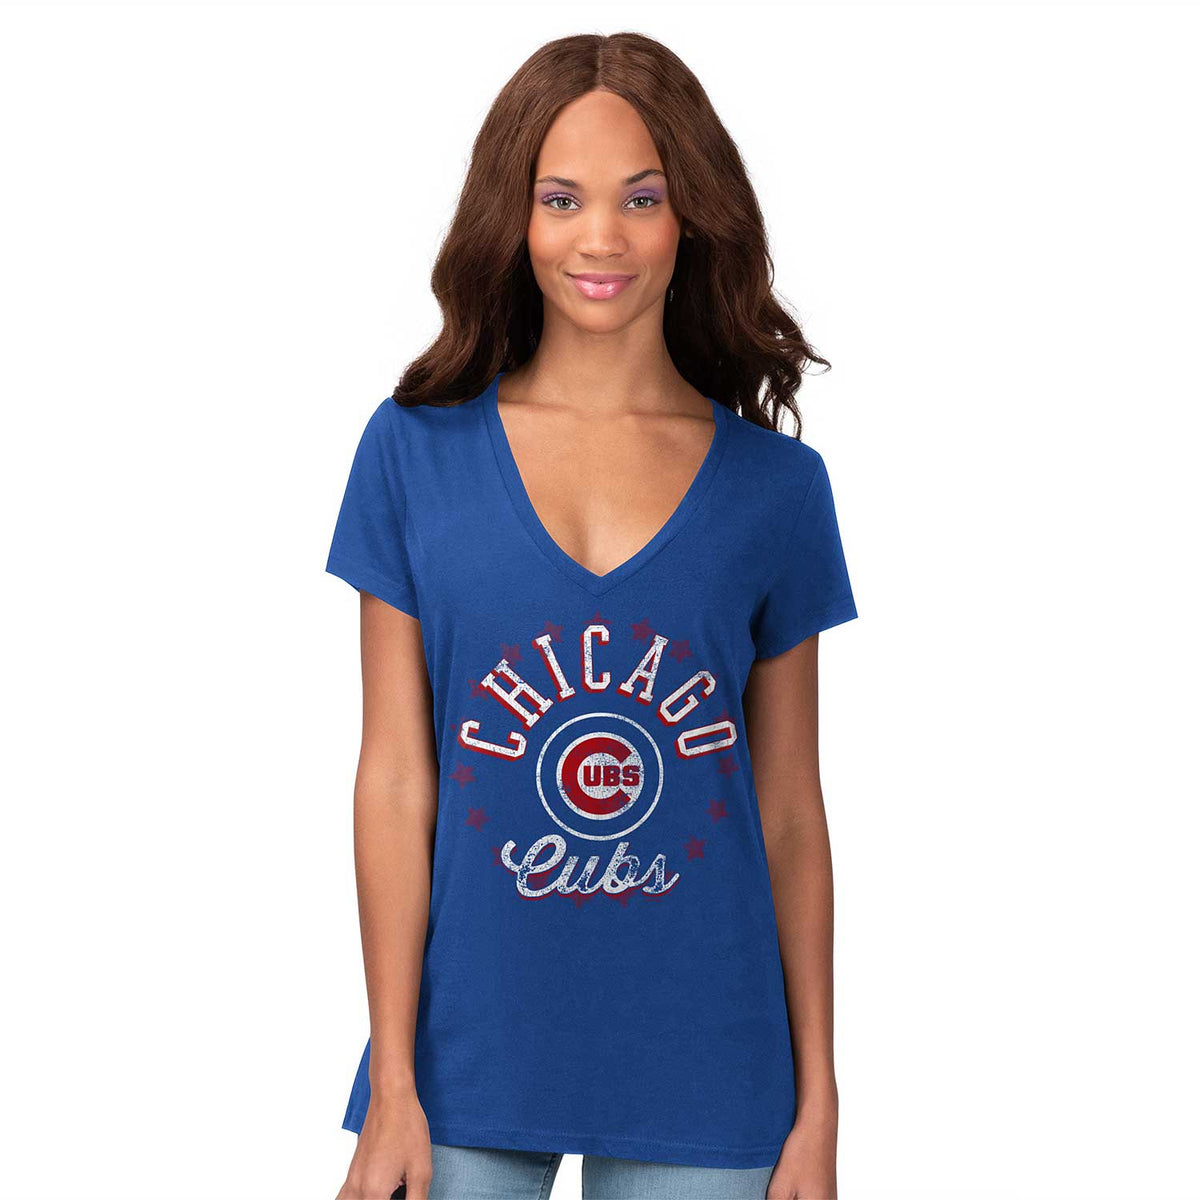 Chicago Cubs Ladies T-Shirt, Ladies Cubs Shirts, Cubs Baseball Shirts, Tees